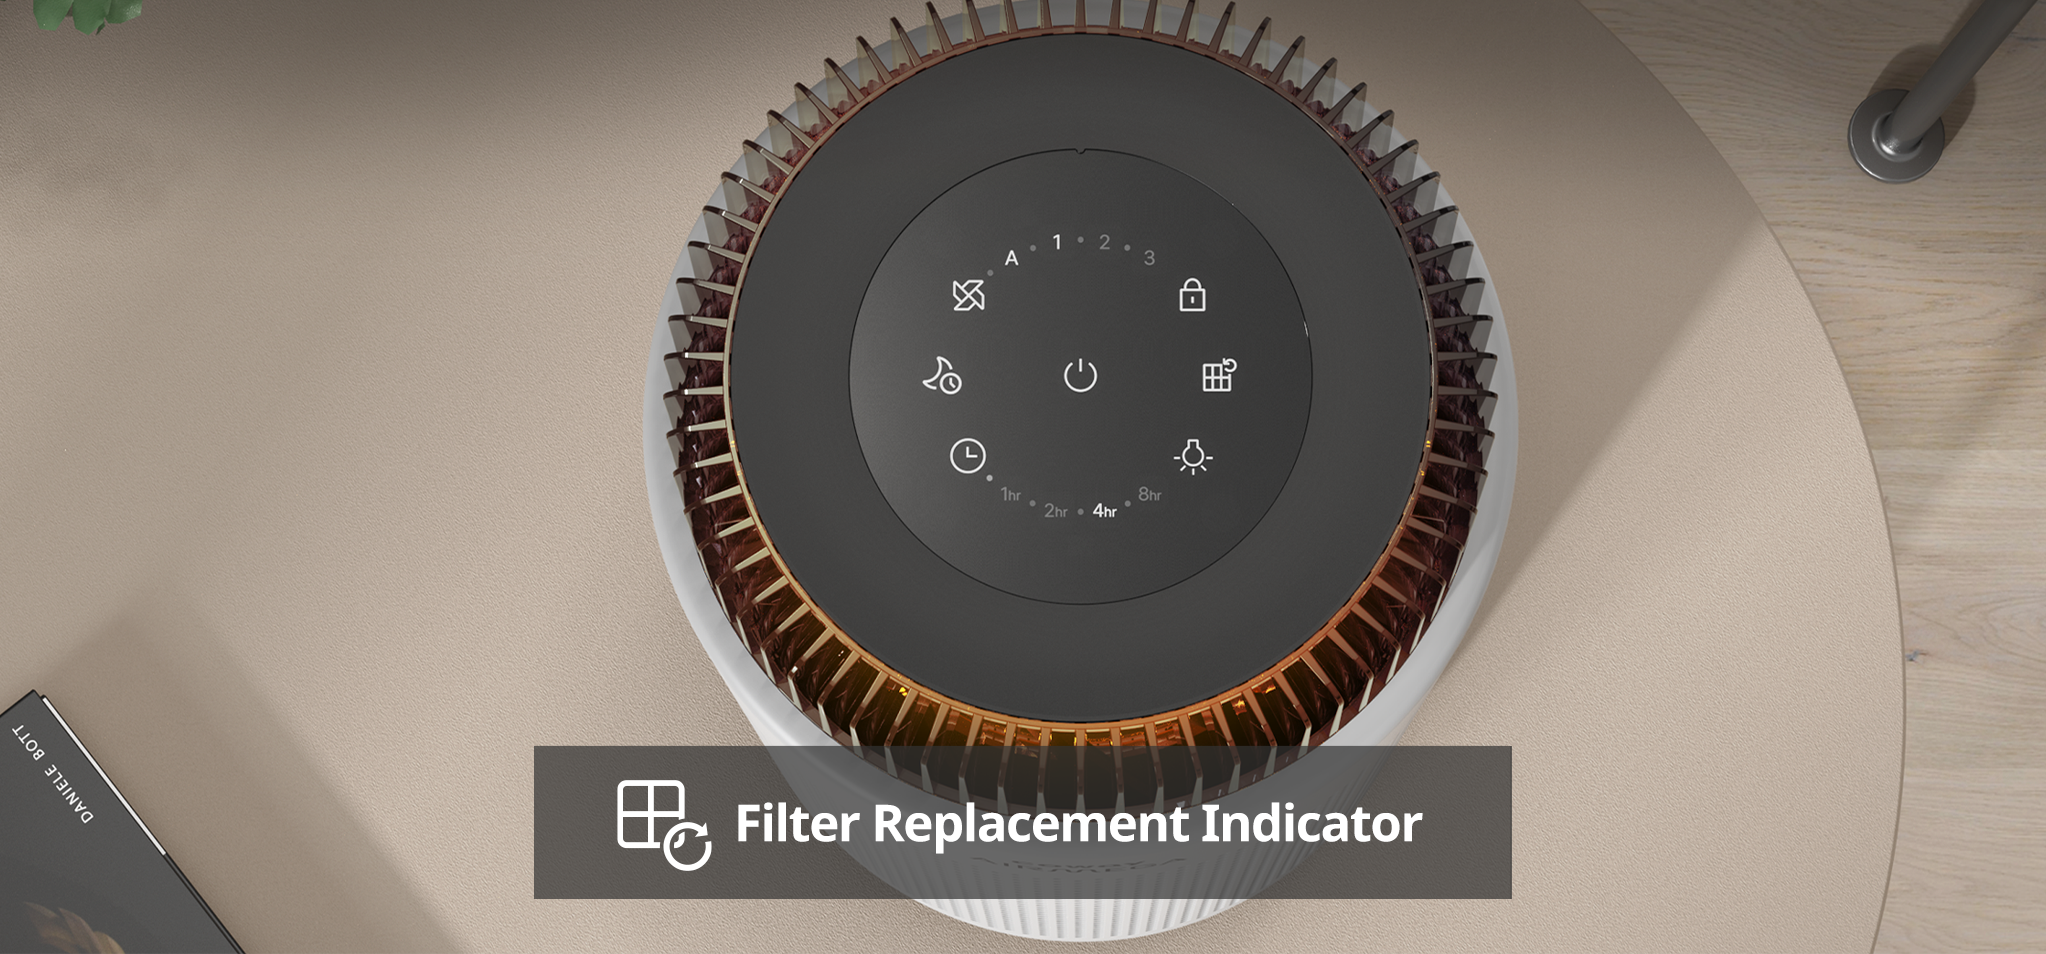 Airmega 100 Filter Replacement Indicator